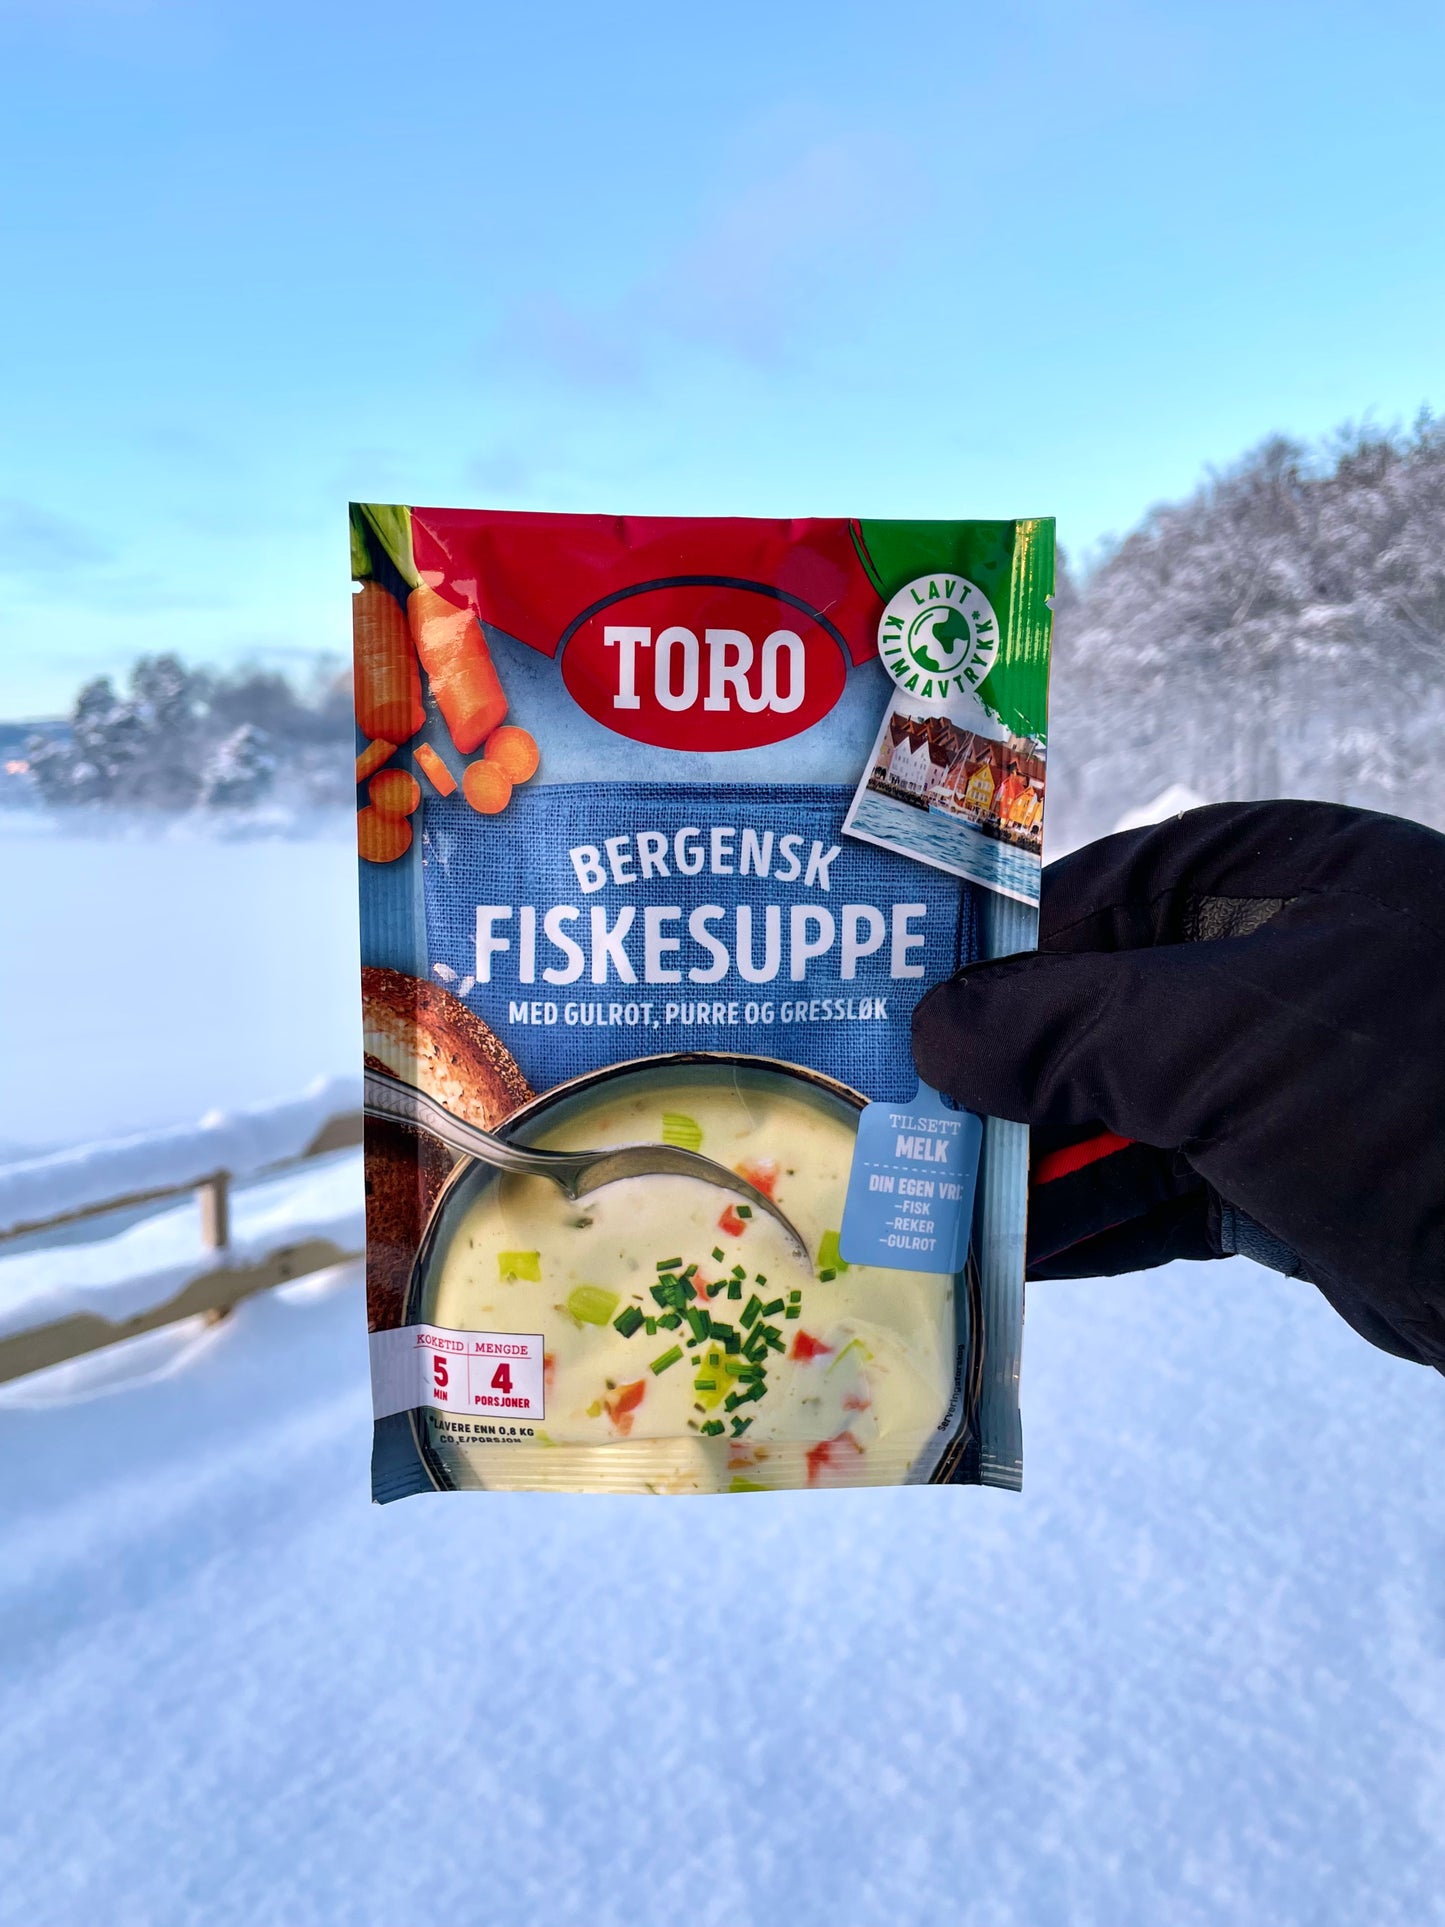 Toro Bergensk Fiskesuppe - Bergen Fish Soup 81g (2.85 oz)